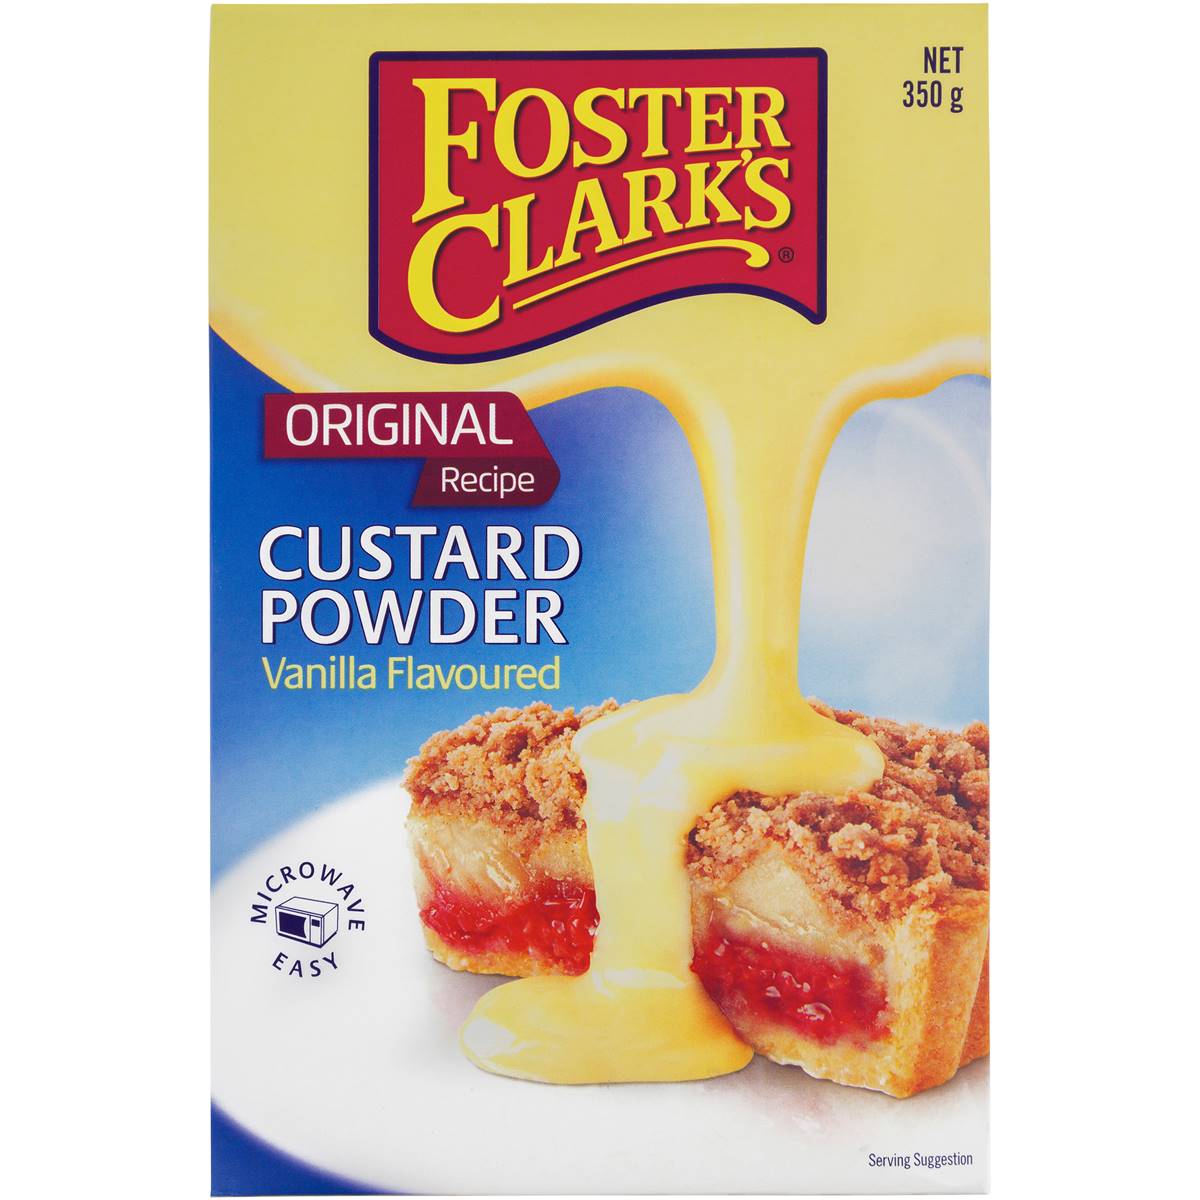 Fosters Clark Custard Powder 350g